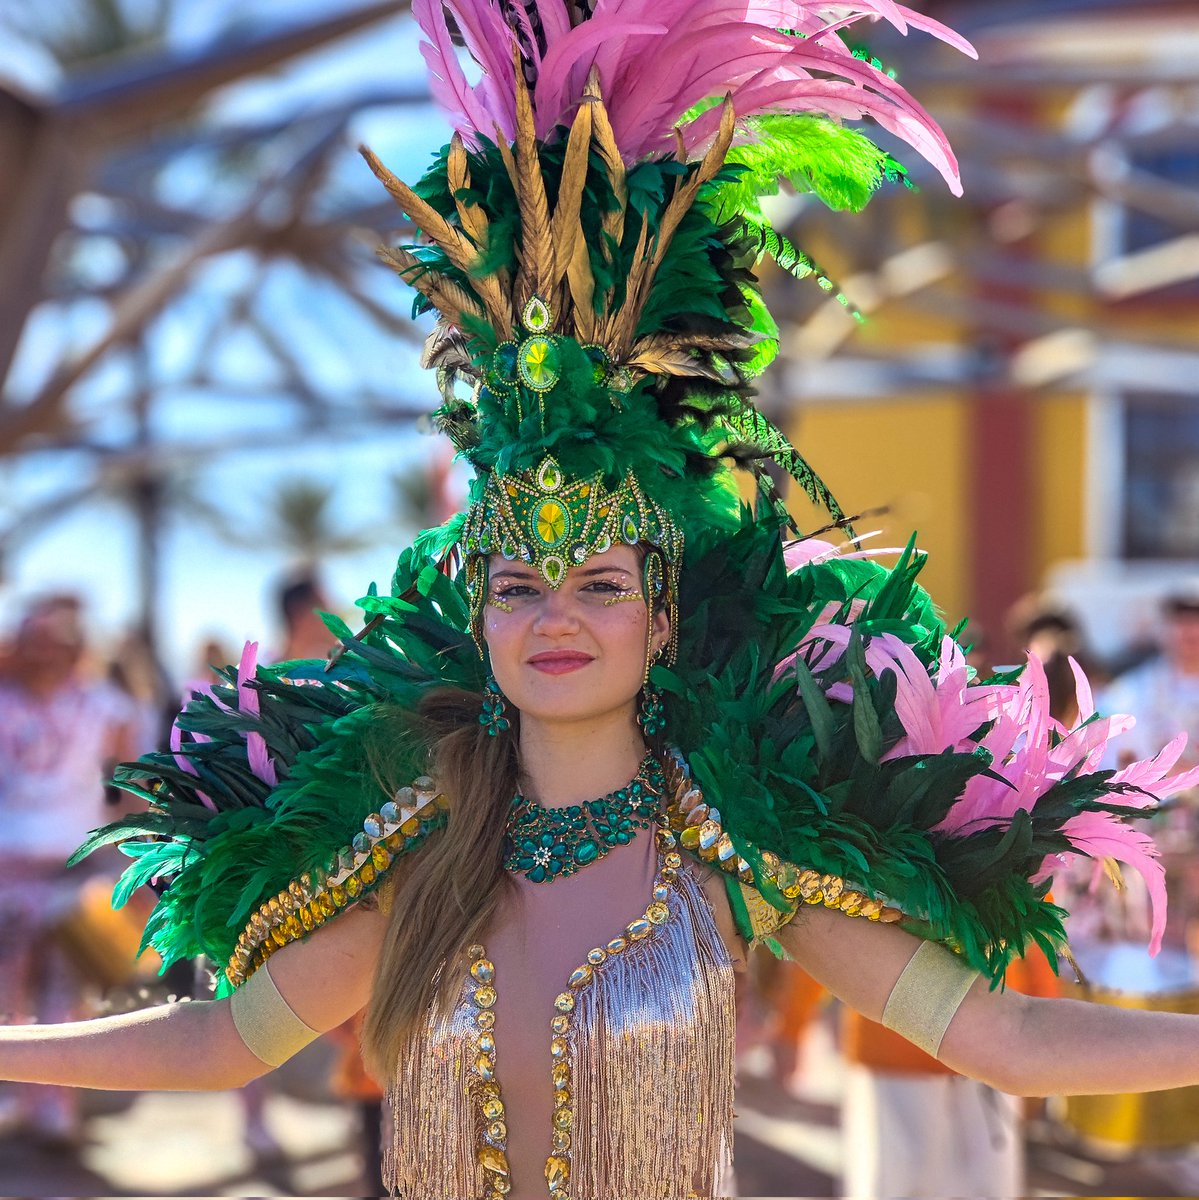 Let the carnival begin 🎉🎉🎉🎉.
Today's photo at the Batucada de Vinaros🎉🎉

#shootonoppo
#portrait_vision 
#oppoportraitoflove 
#portraitphotography 
#oppo
#shotonsnapdragon 
#vinaros 
#carnaval 
#carnavaldevinaros
#portrait_shots 
#TheMobPhotographer 
#thebest
#carnival